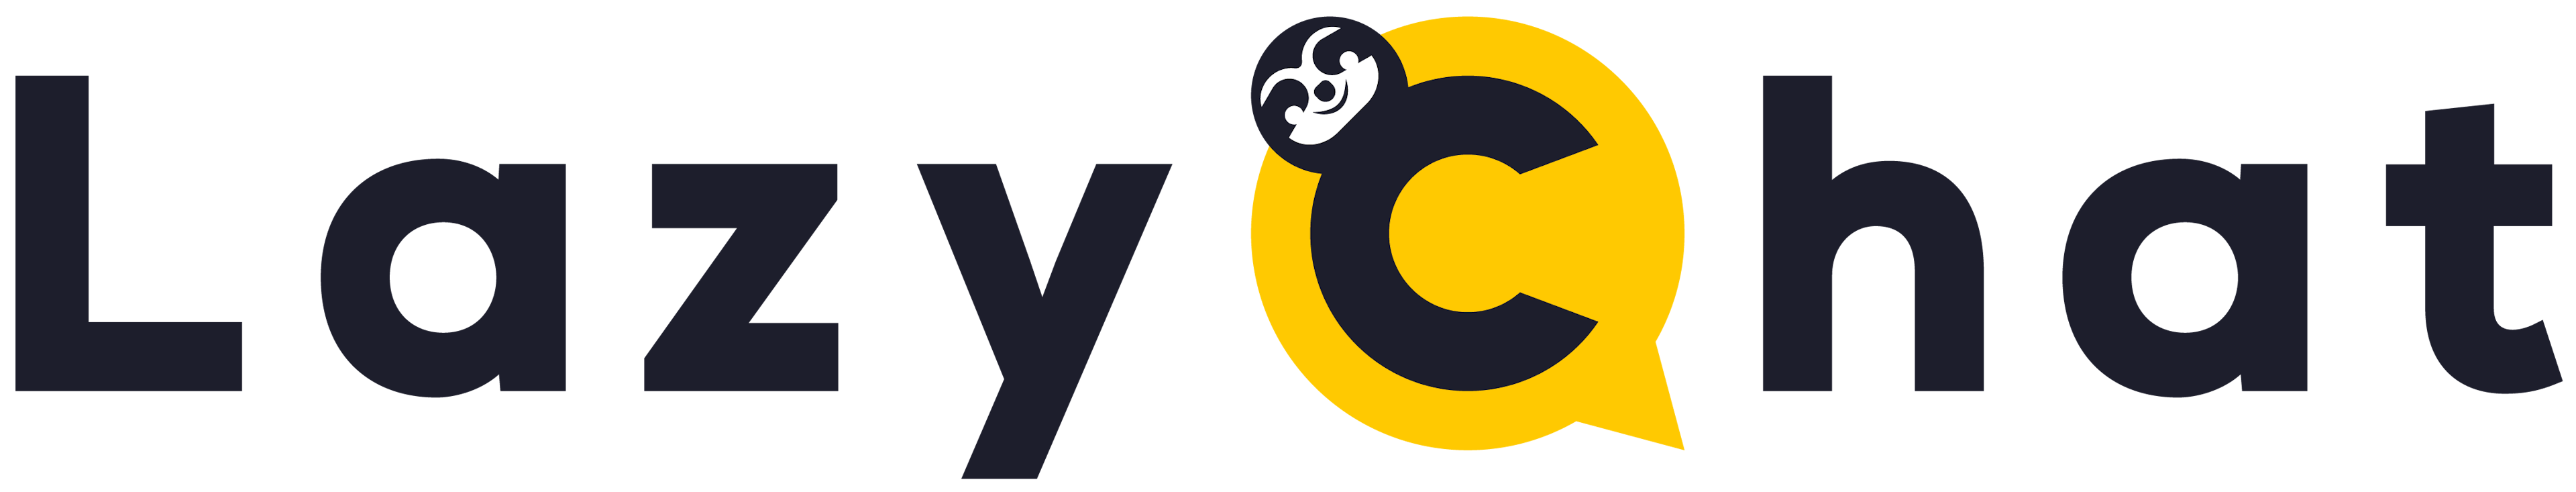 LazyChat Logo